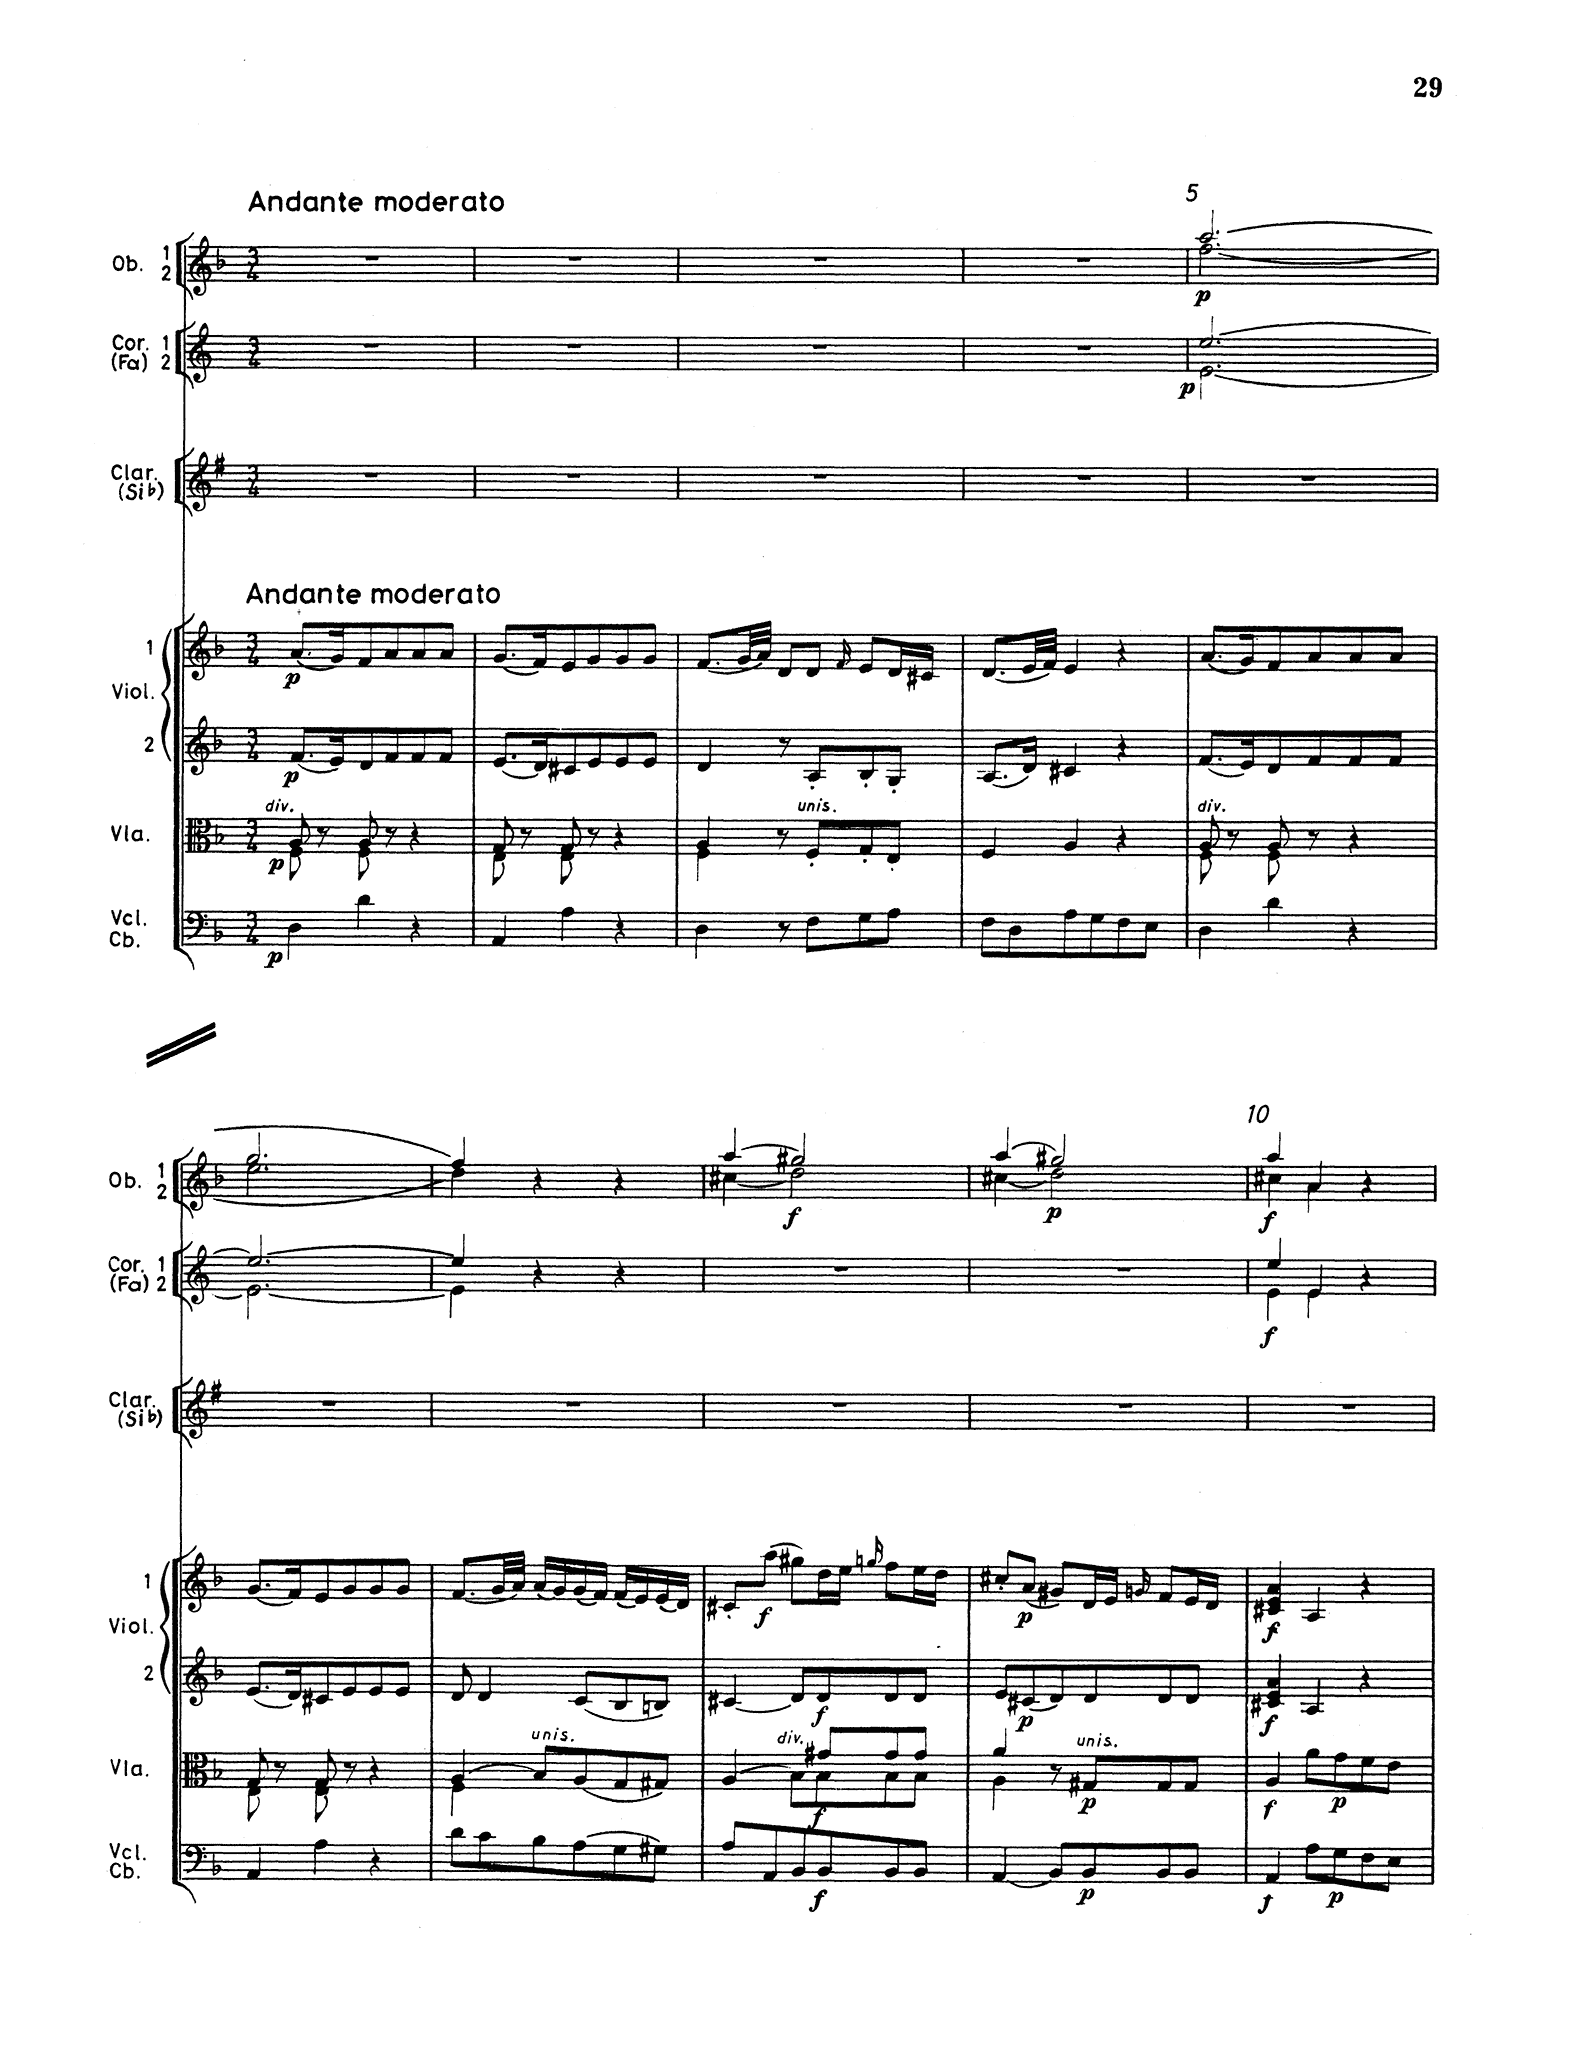 Carl Stamitz Clarinet Concerto No. 1 (Kaiser) in F Major full score - Movement 2